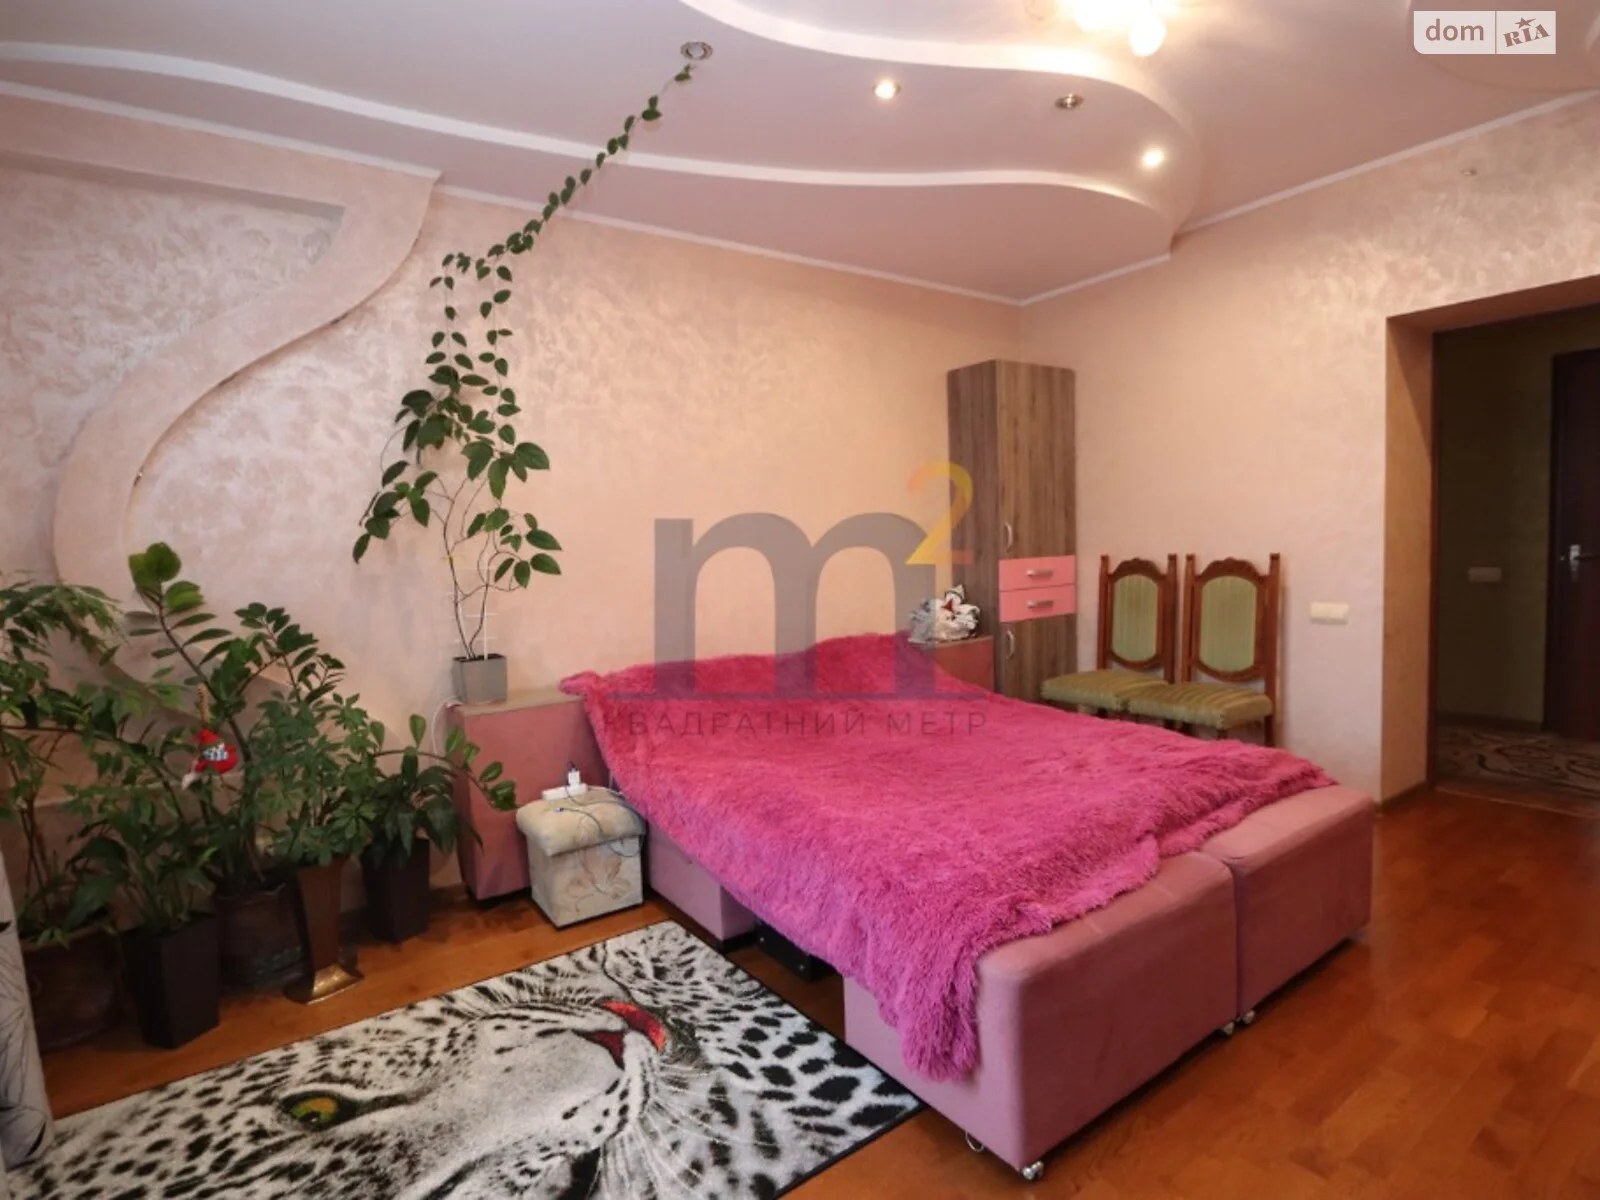 Продается 2-комнатная квартира 62.5 кв. м в Ивано-Франковске - фото 2